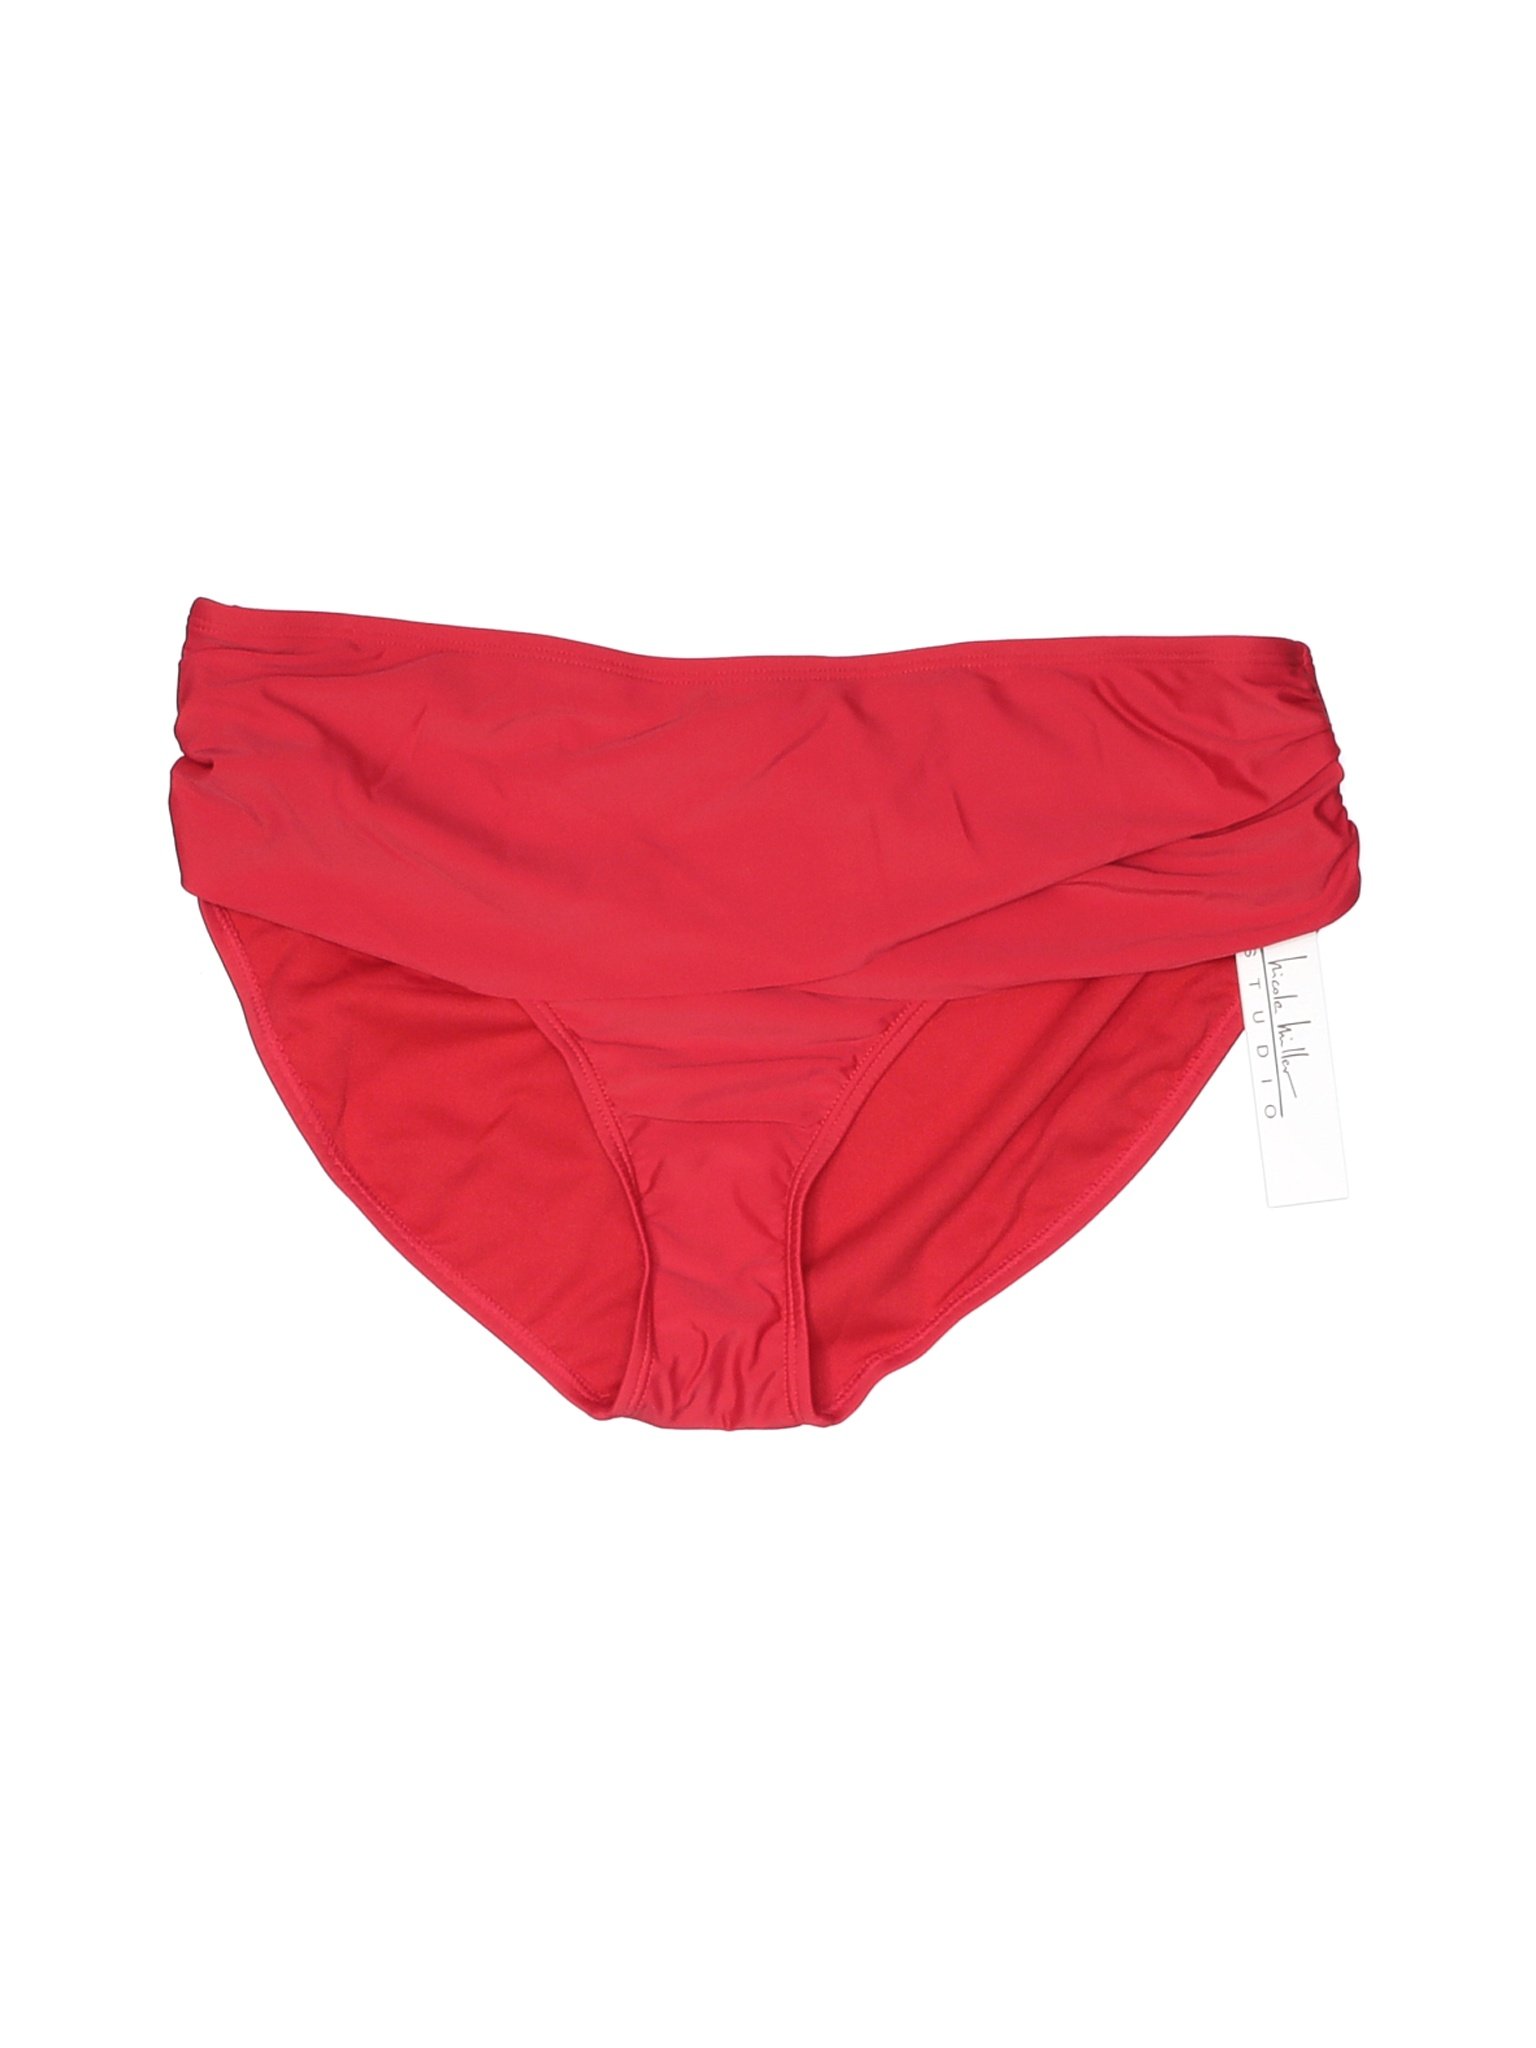 NWT Nicole by Nicole Miller Women Red Swimsuit Bottoms L | eBay